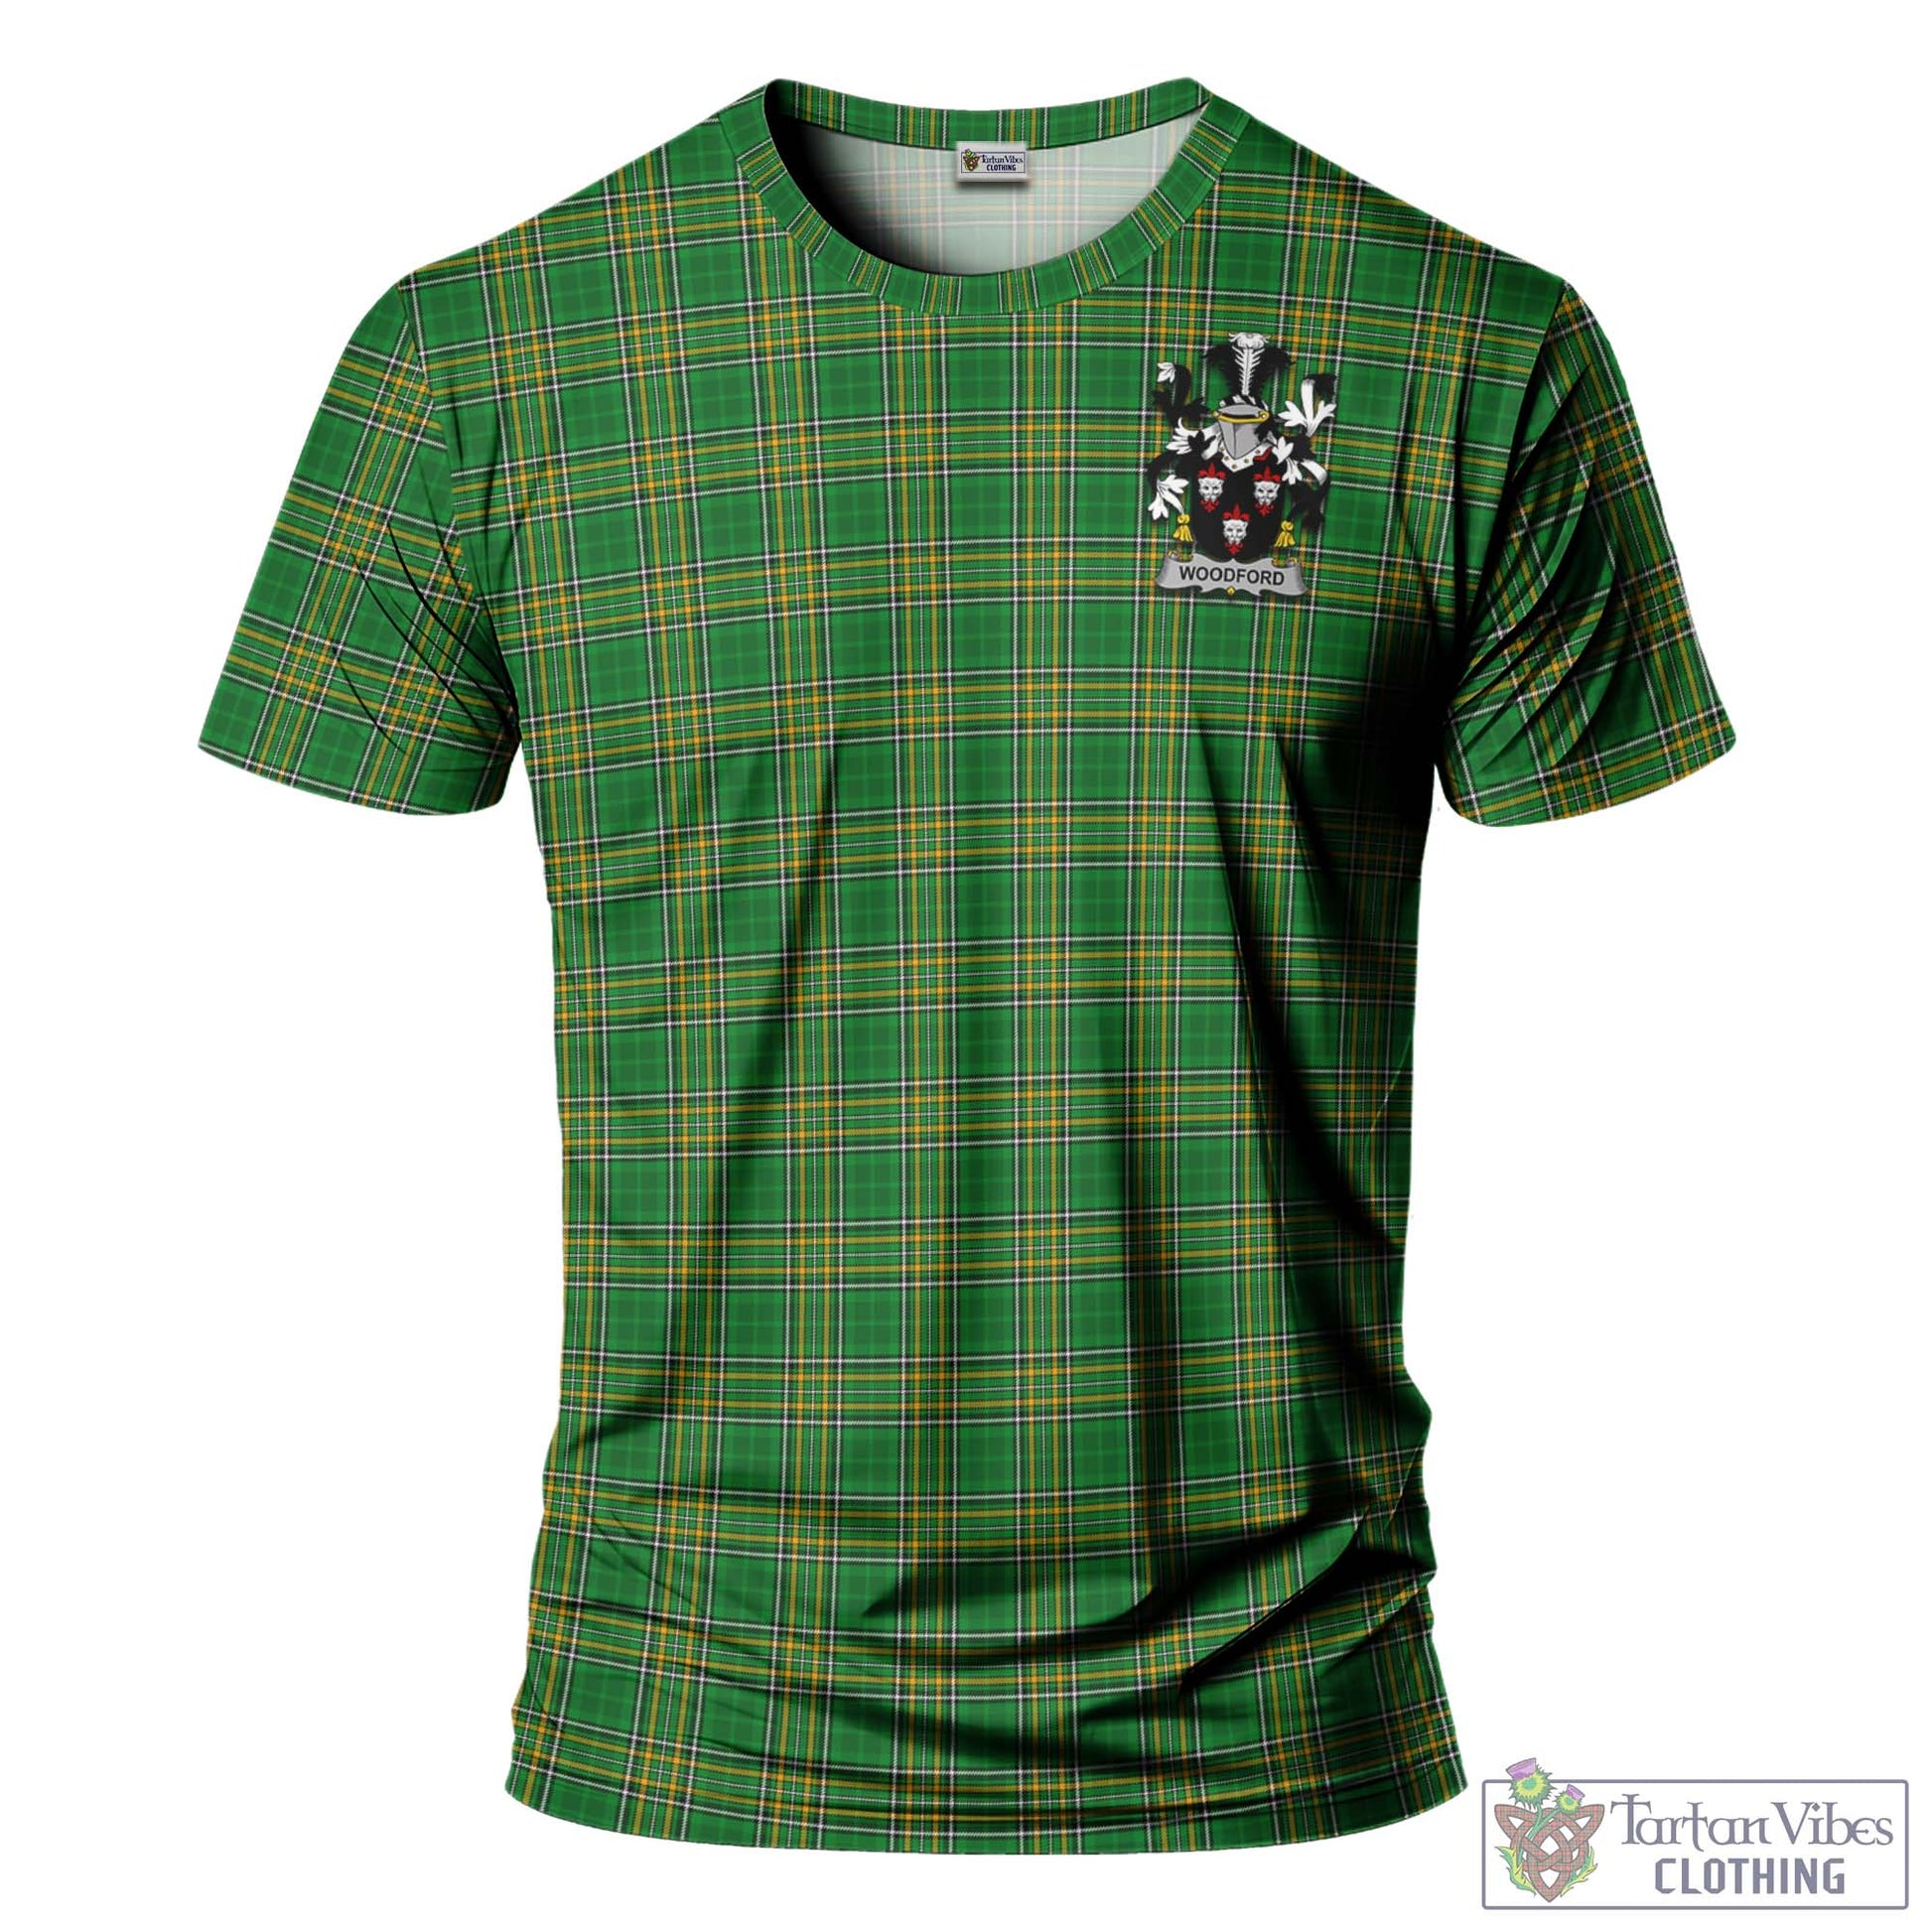 Tartan Vibes Clothing Woodford Ireland Clan Tartan T-Shirt with Family Seal